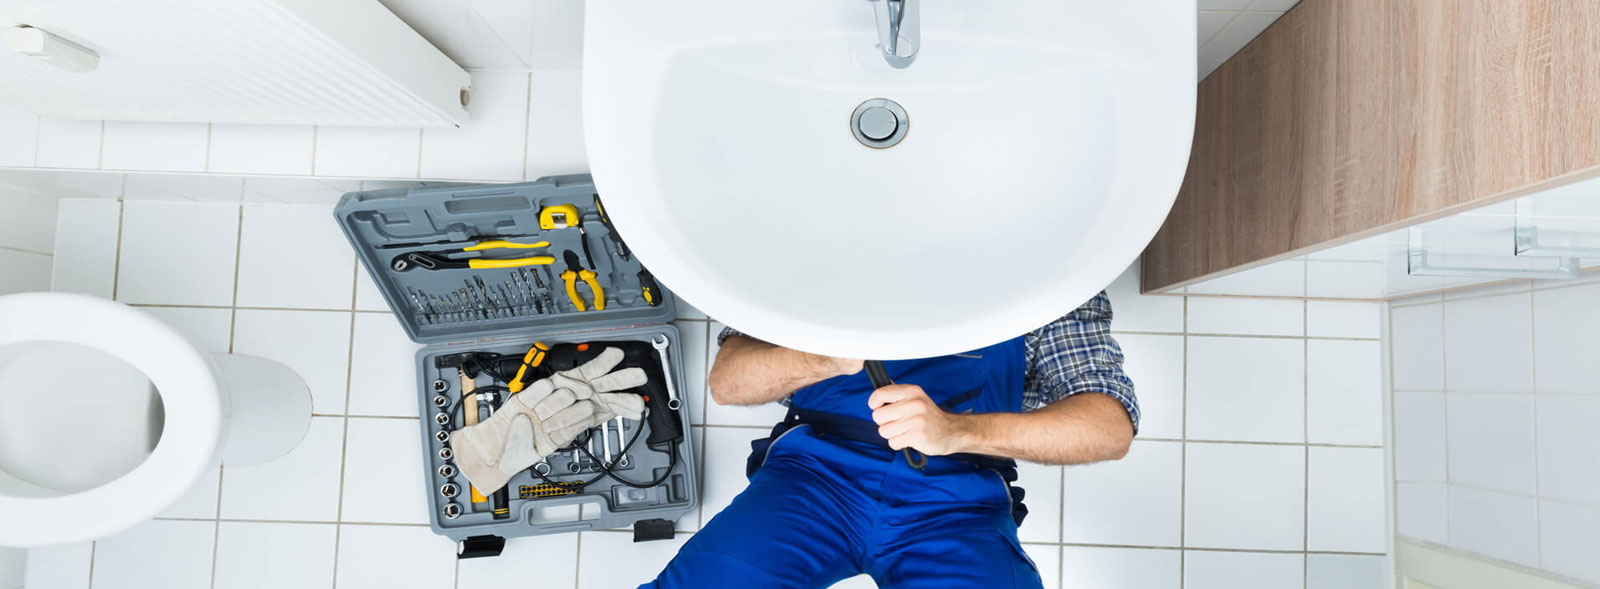 Plumbing-bath-kitchen-sink-taps-leaks